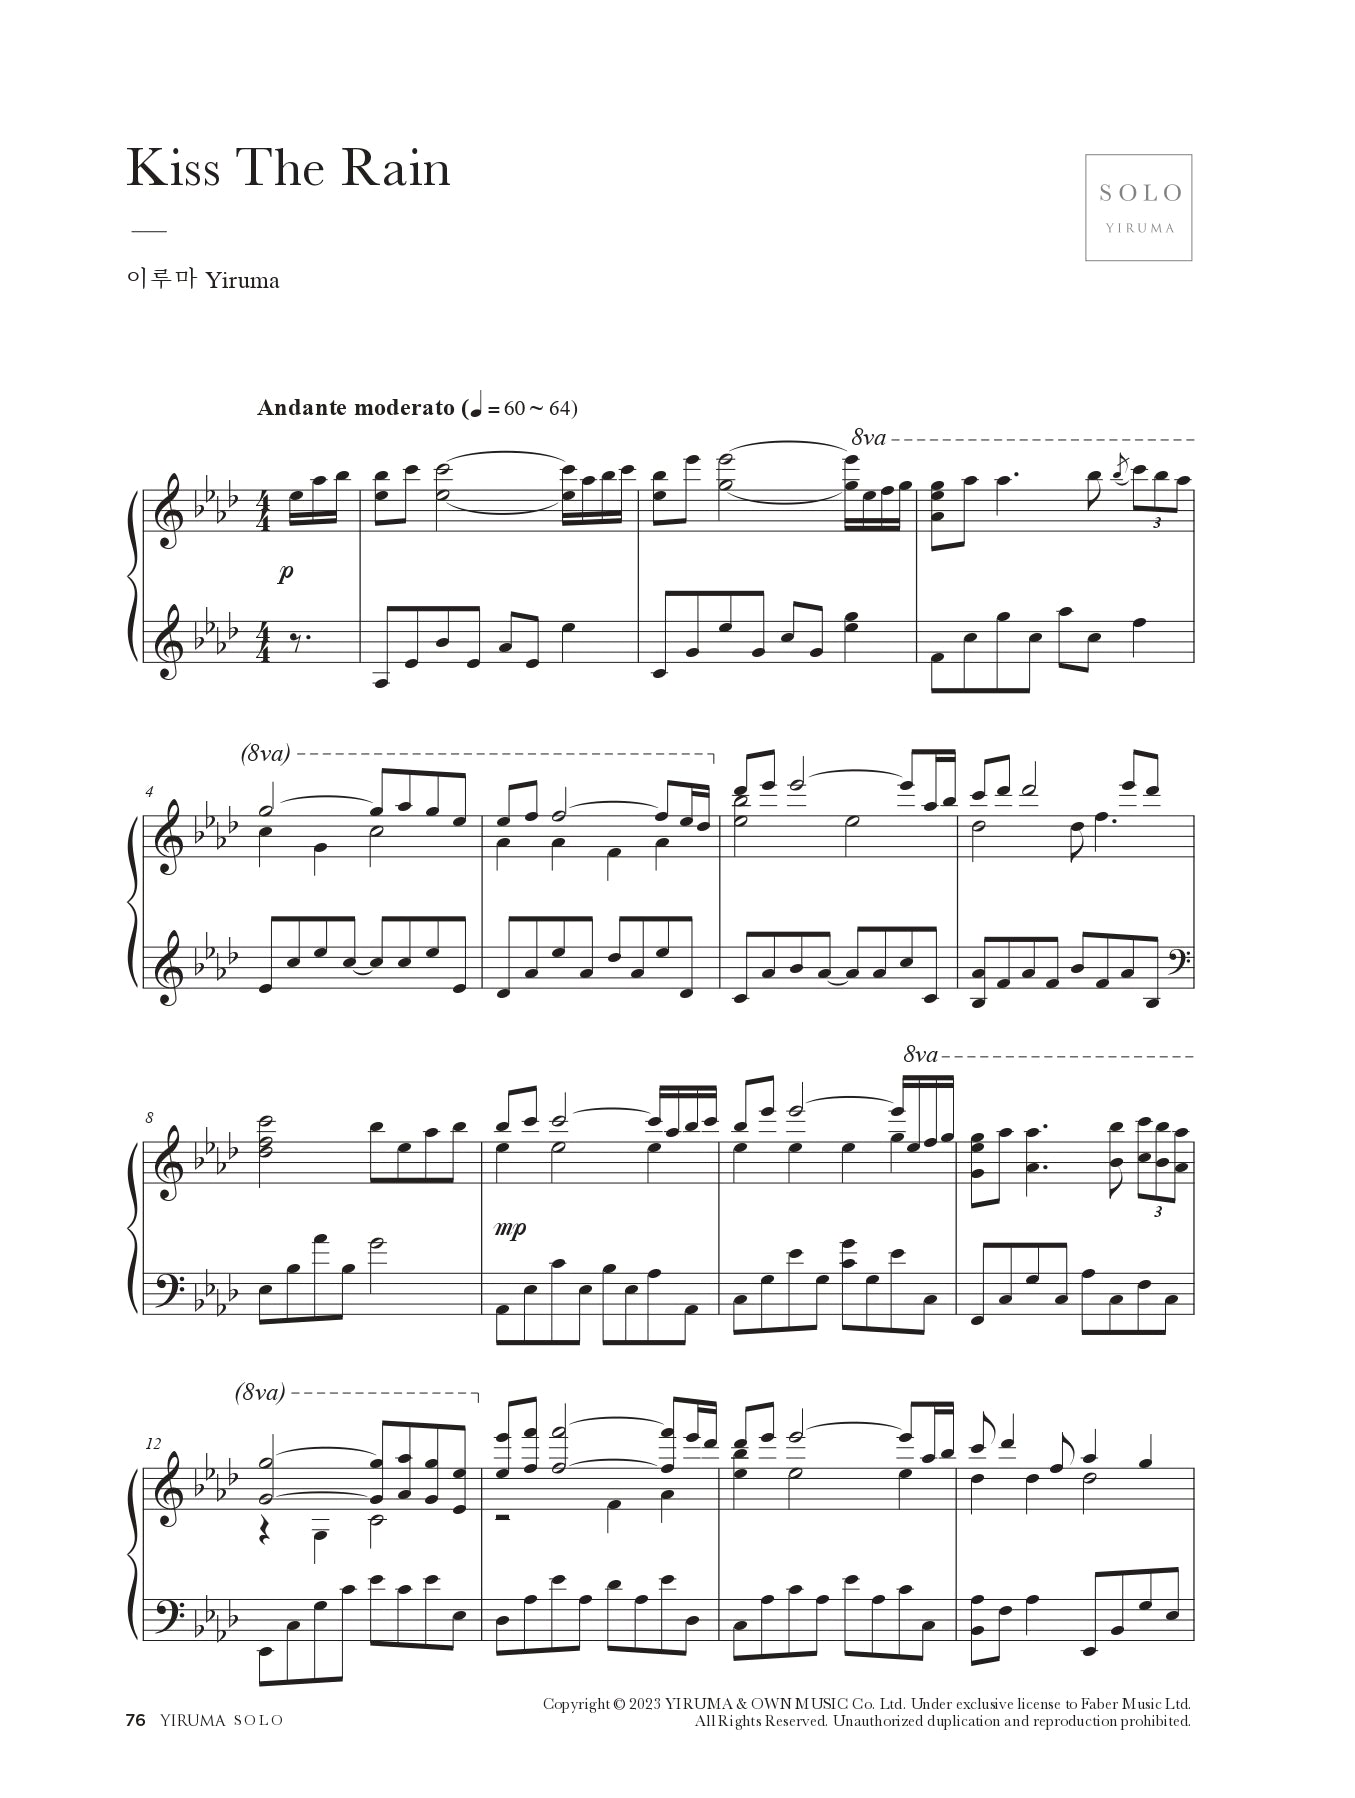 Faber Music - Yiruma Solo Original Score Book